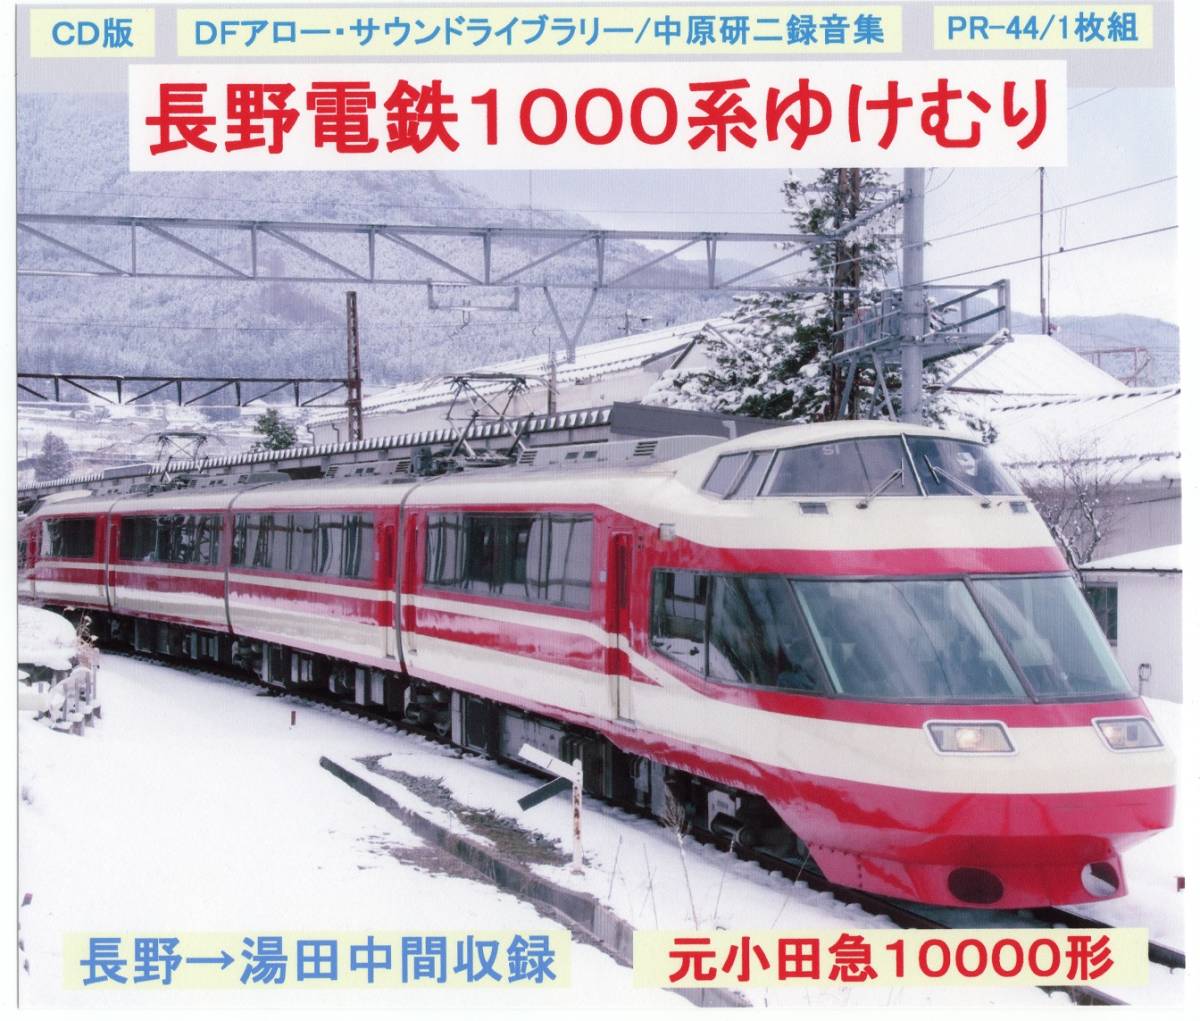 DF Arrow *CD version *PR-44* Nagano electro- iron 1000 series ....